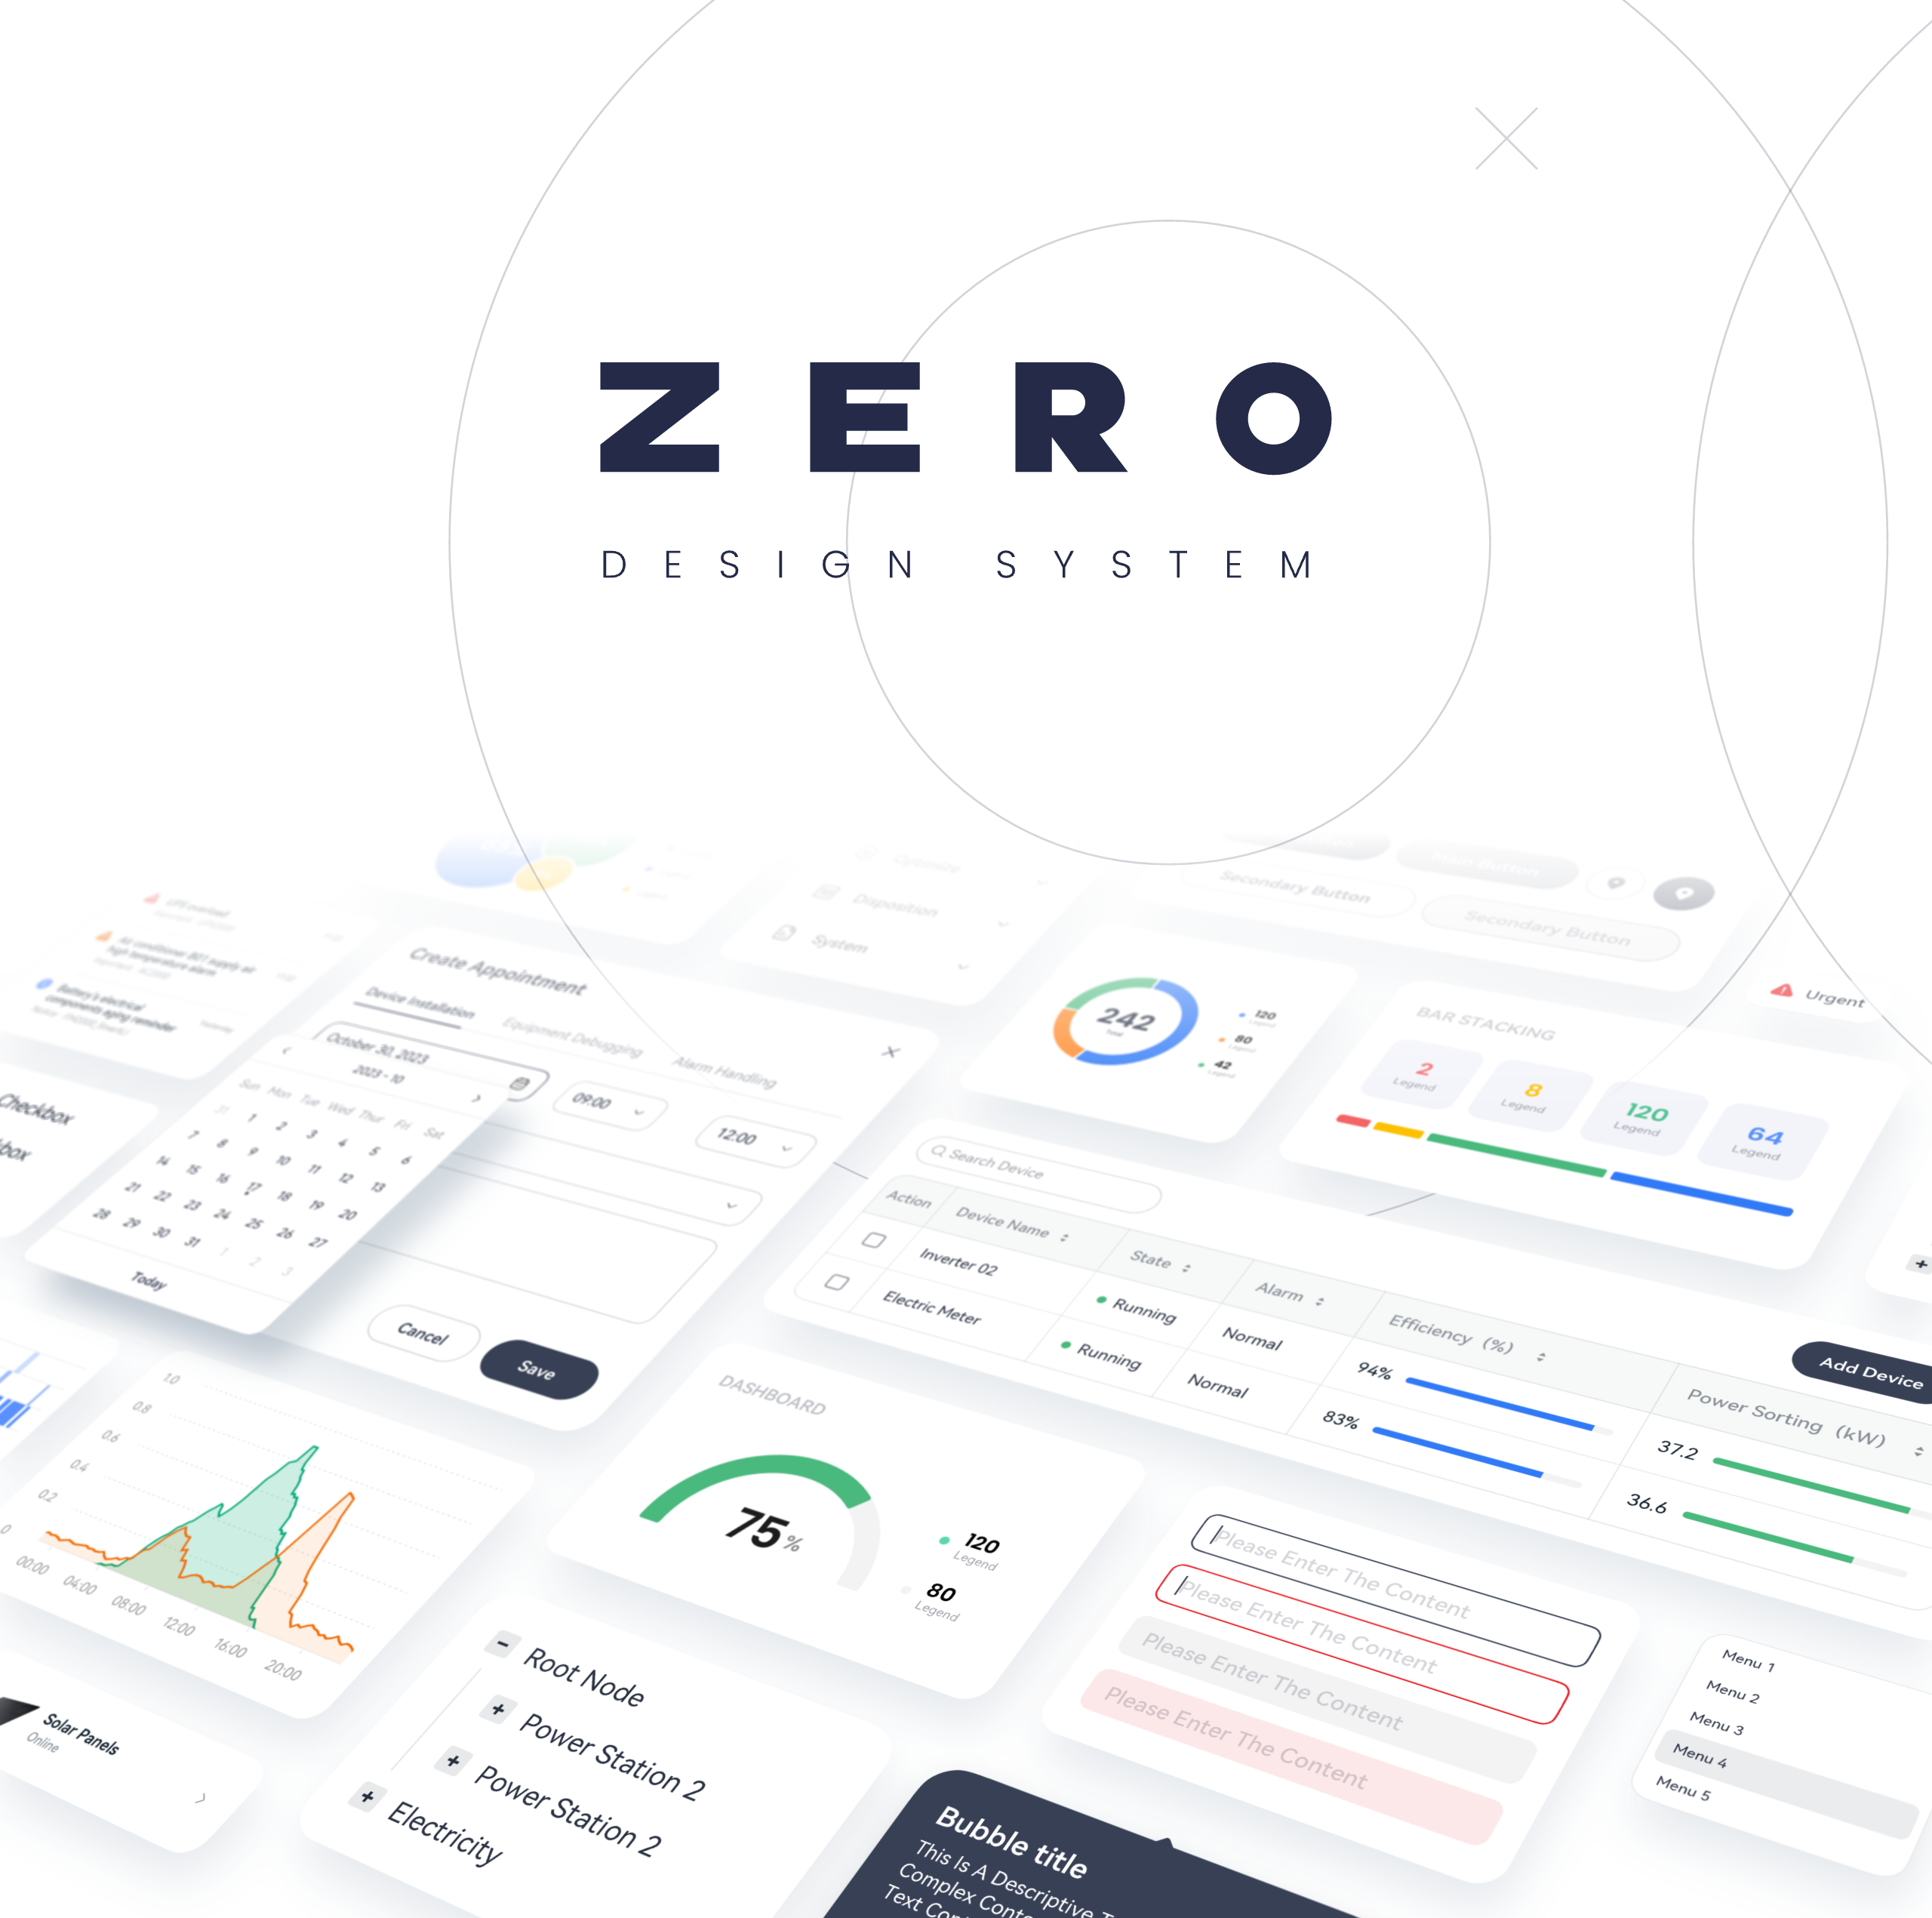 ZERO Design System